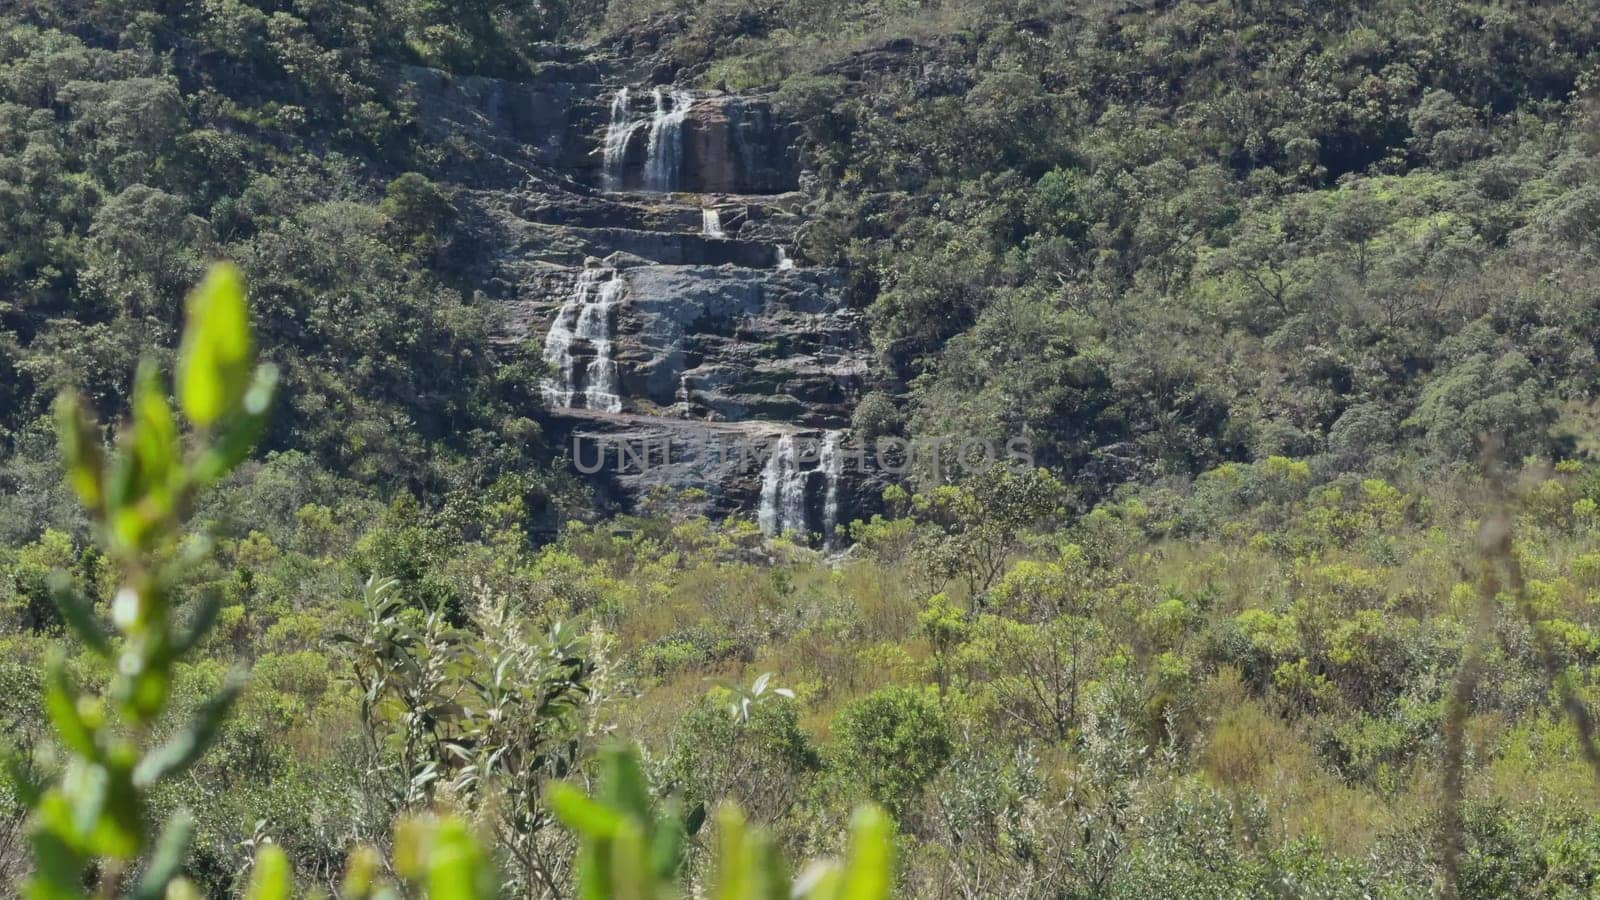 Breathtaking waterfalls cascade in lush Atlantic rainforest.